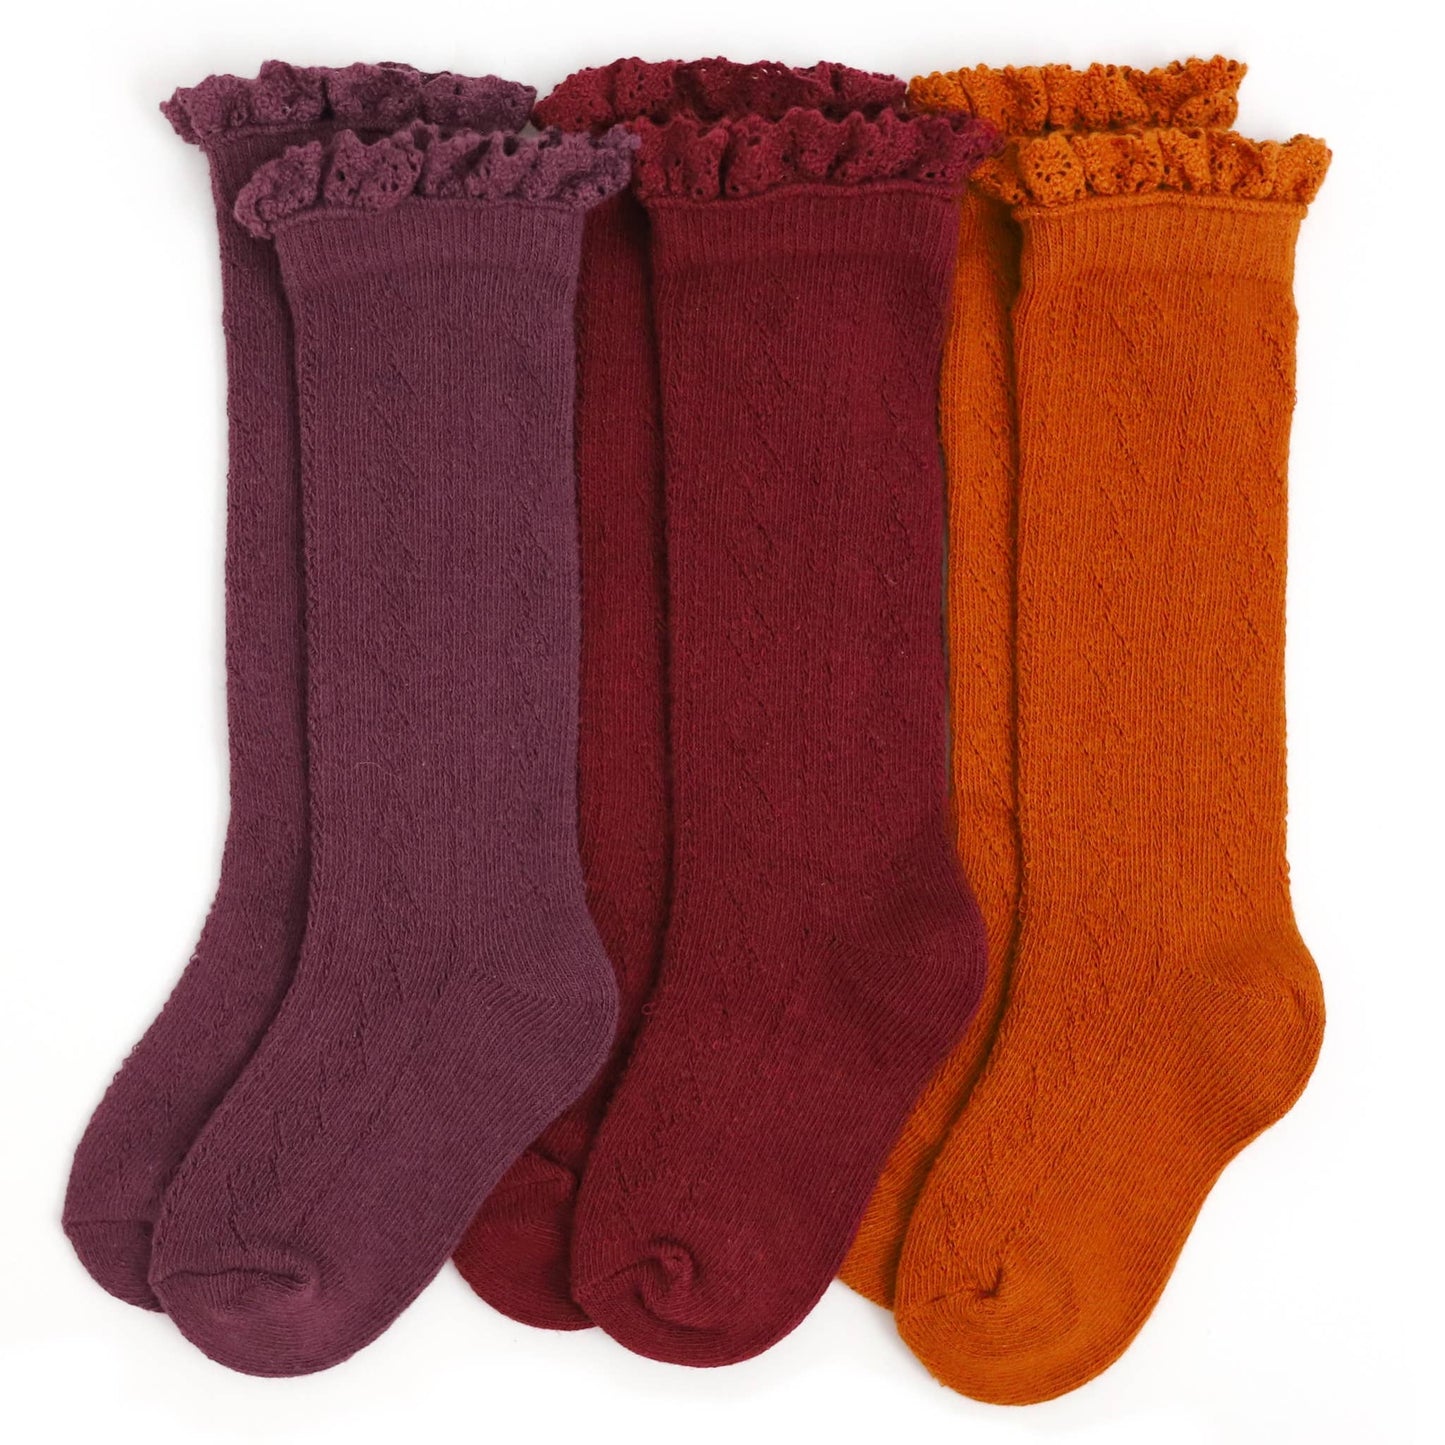 Autumn Fancy Knee High Sock 3-Pack: 1.5-3 YEARS